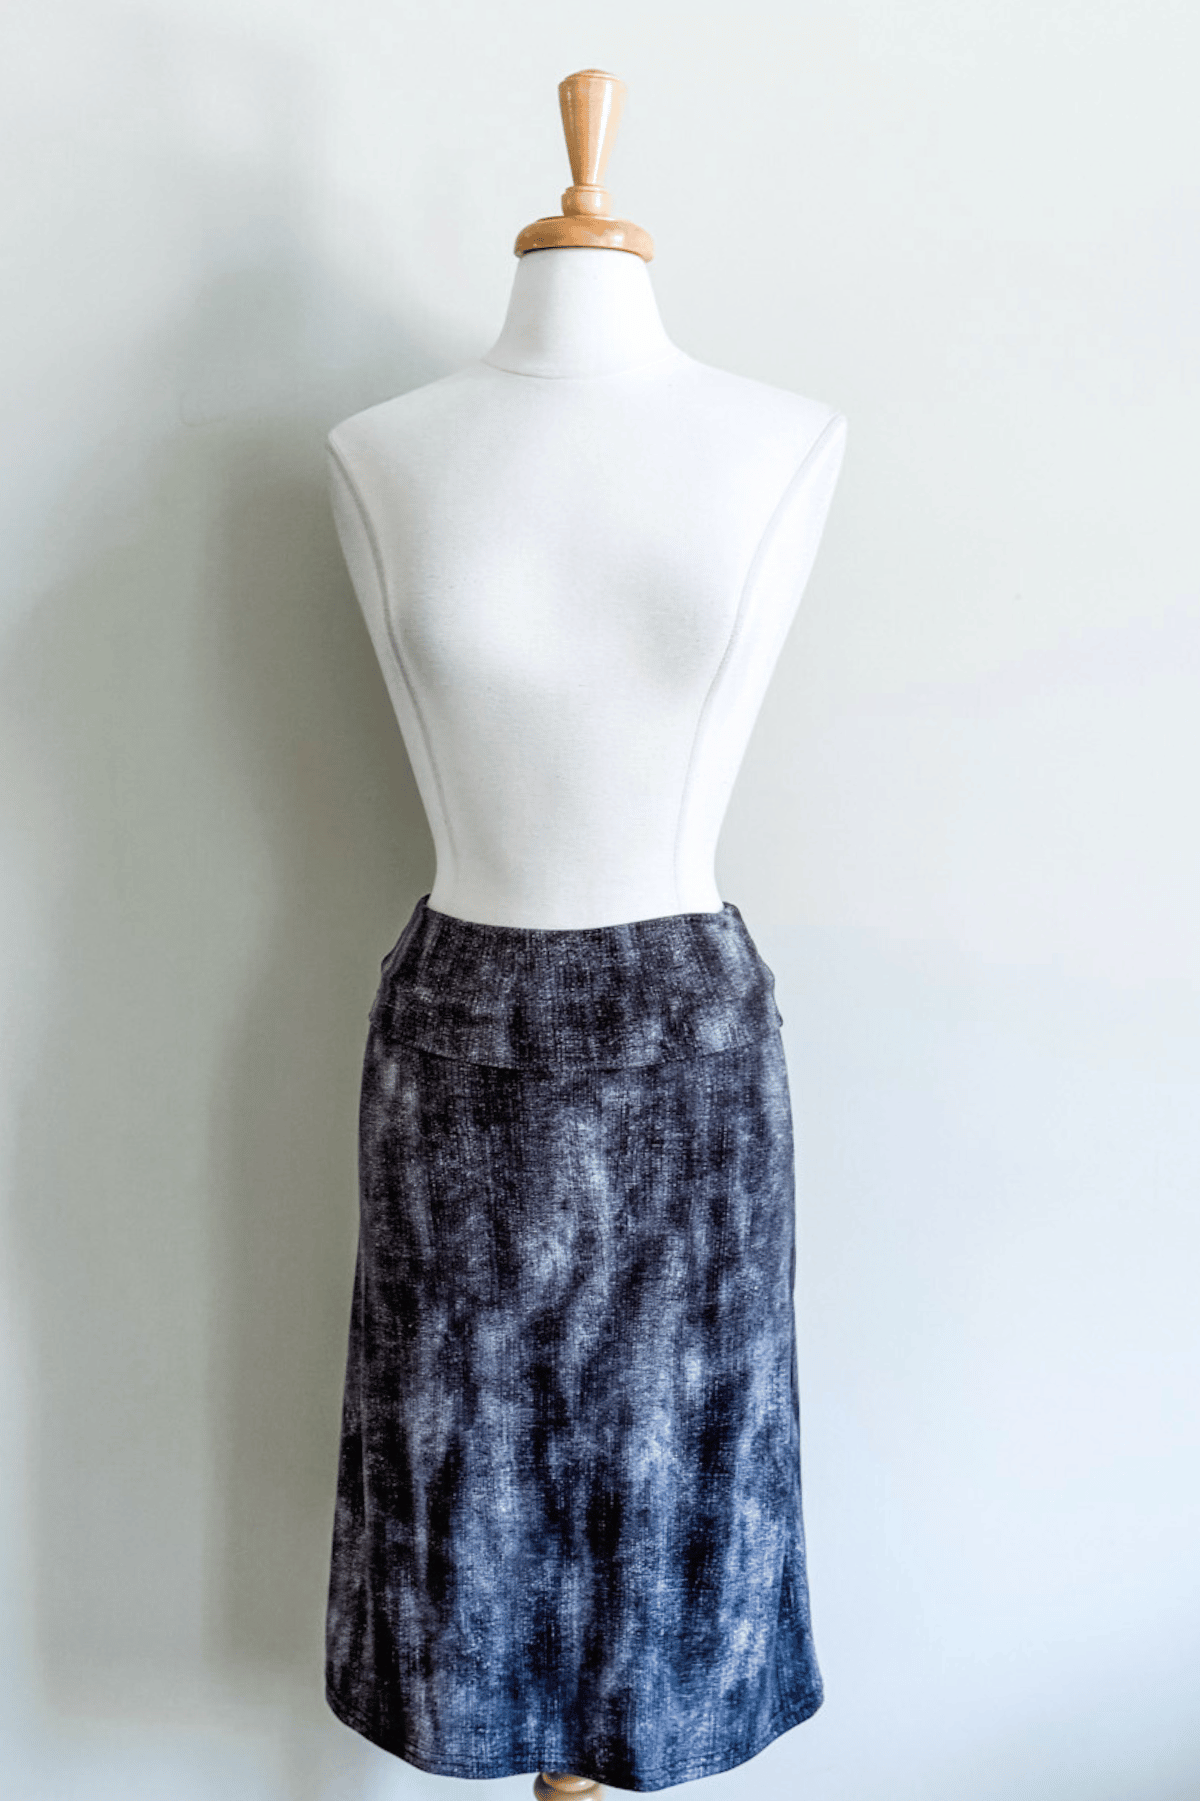 Slip Skirt in Charcoal Distressed Print